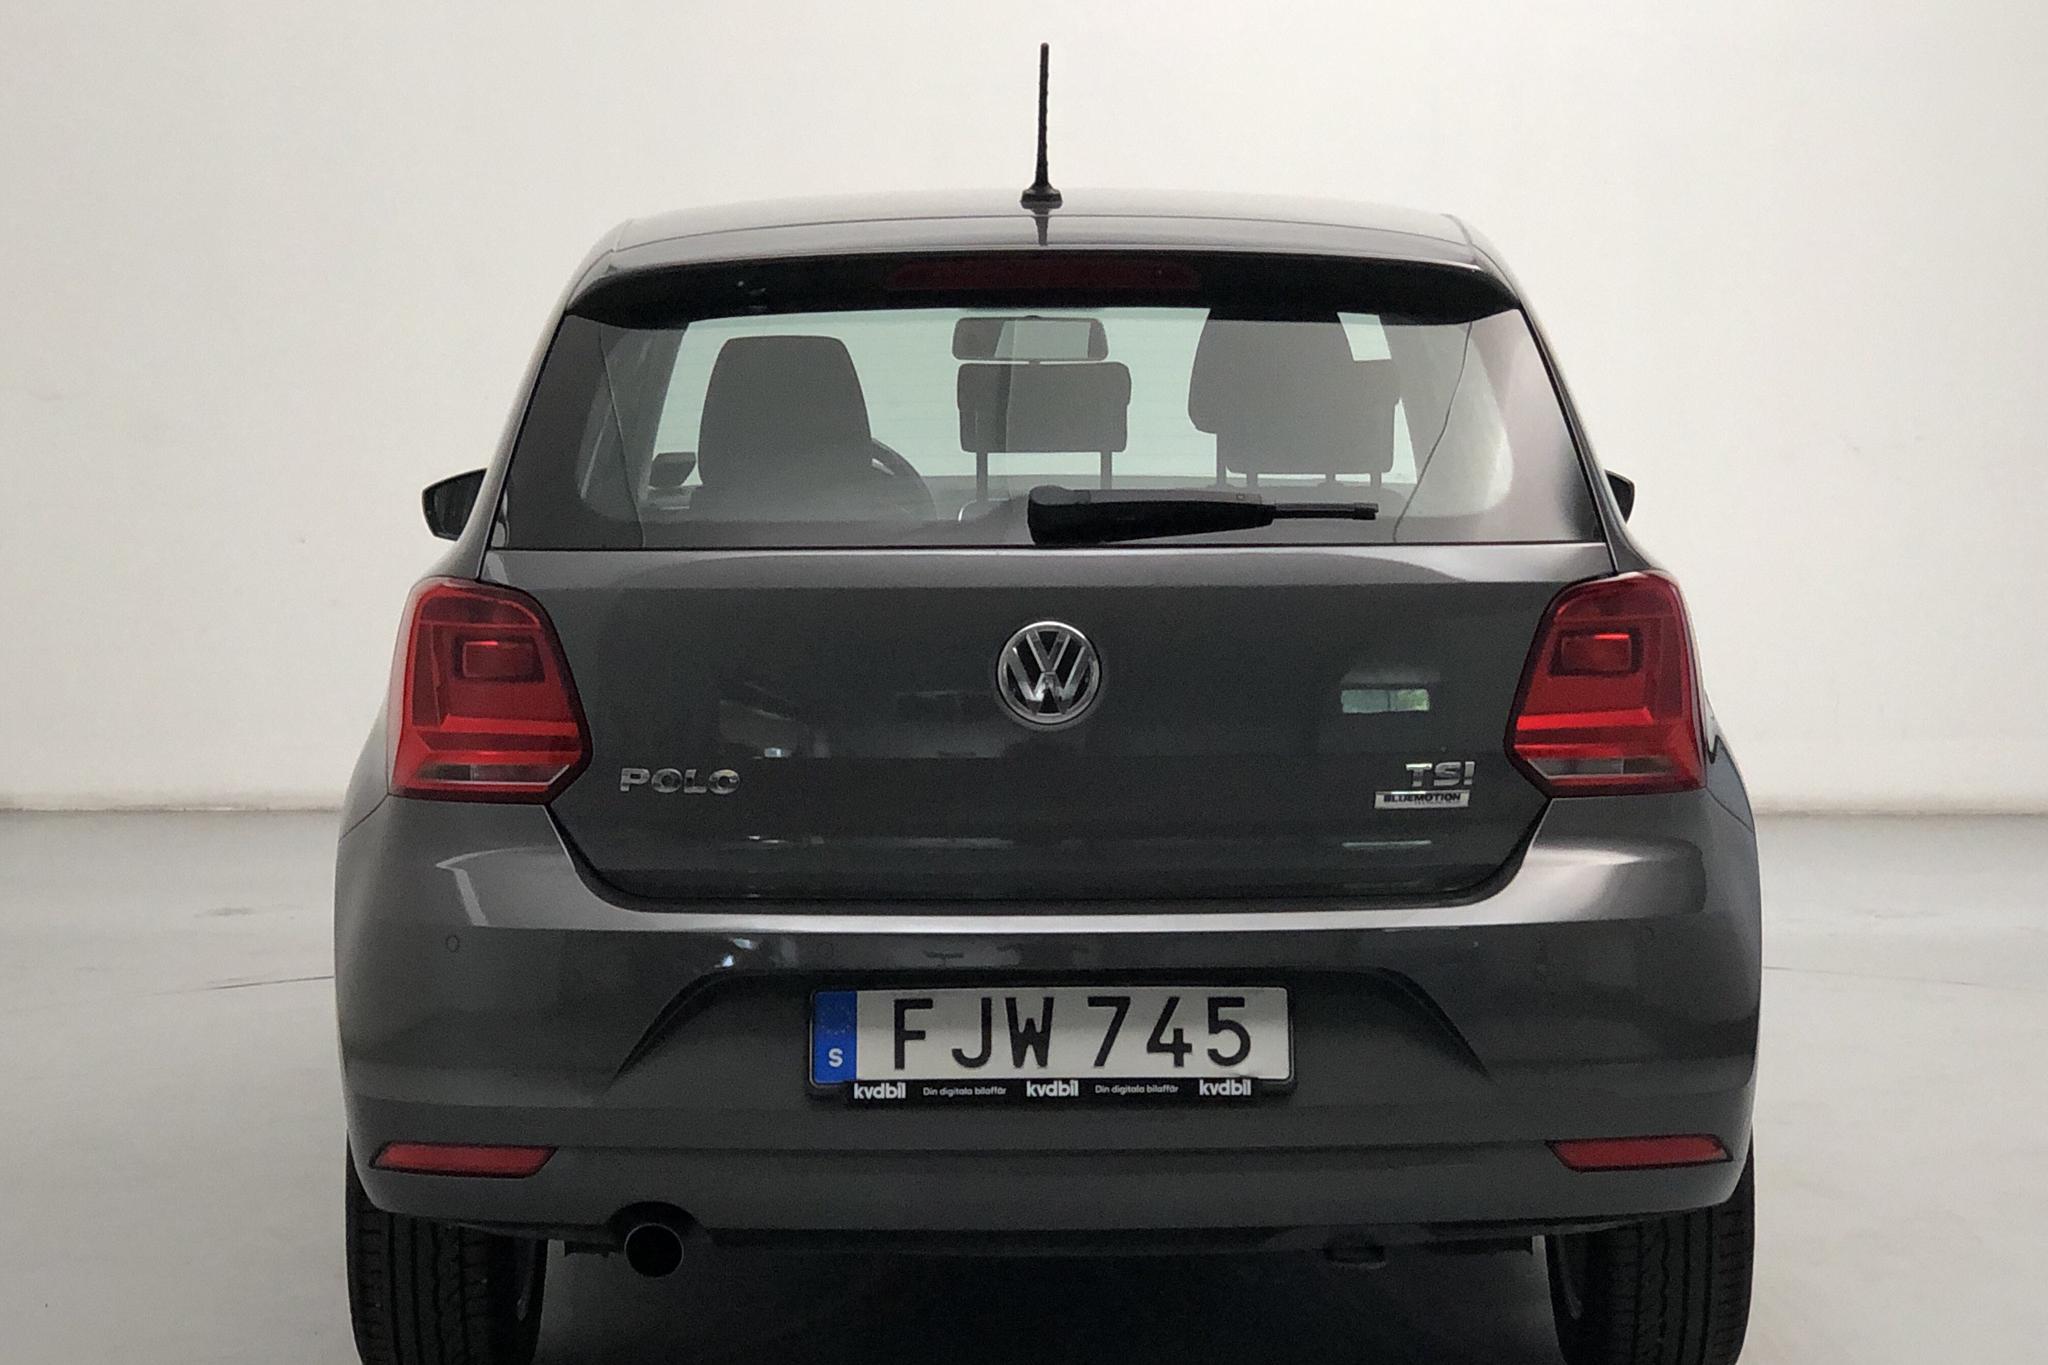 VW Polo 1.2 TSI 5dr (90hk) - 61 900 km - Manual - Dark Grey - 2016